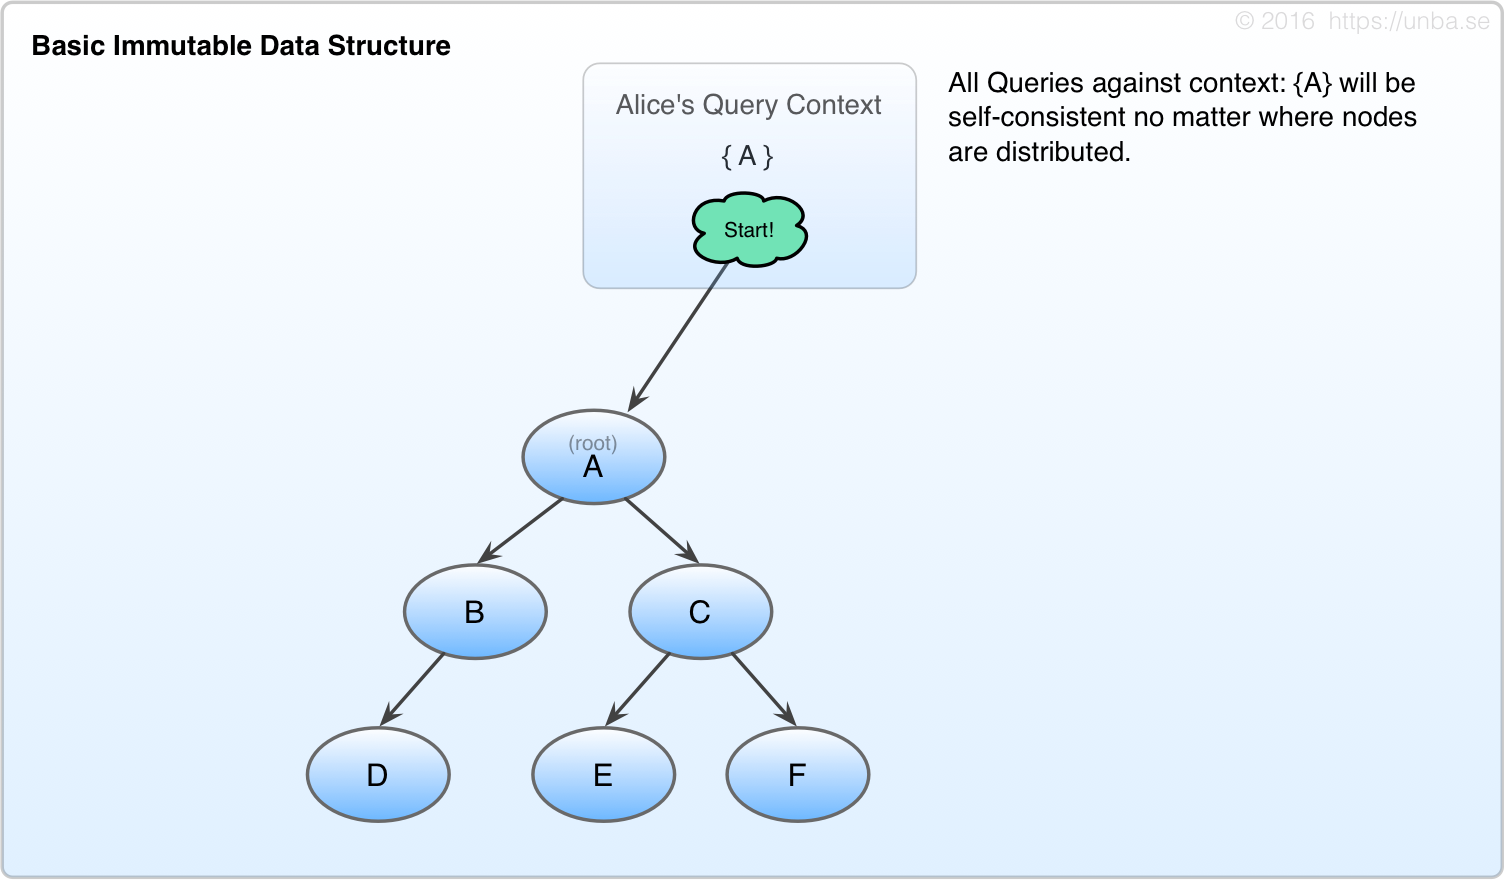 Illustration of a basic immutable data structure